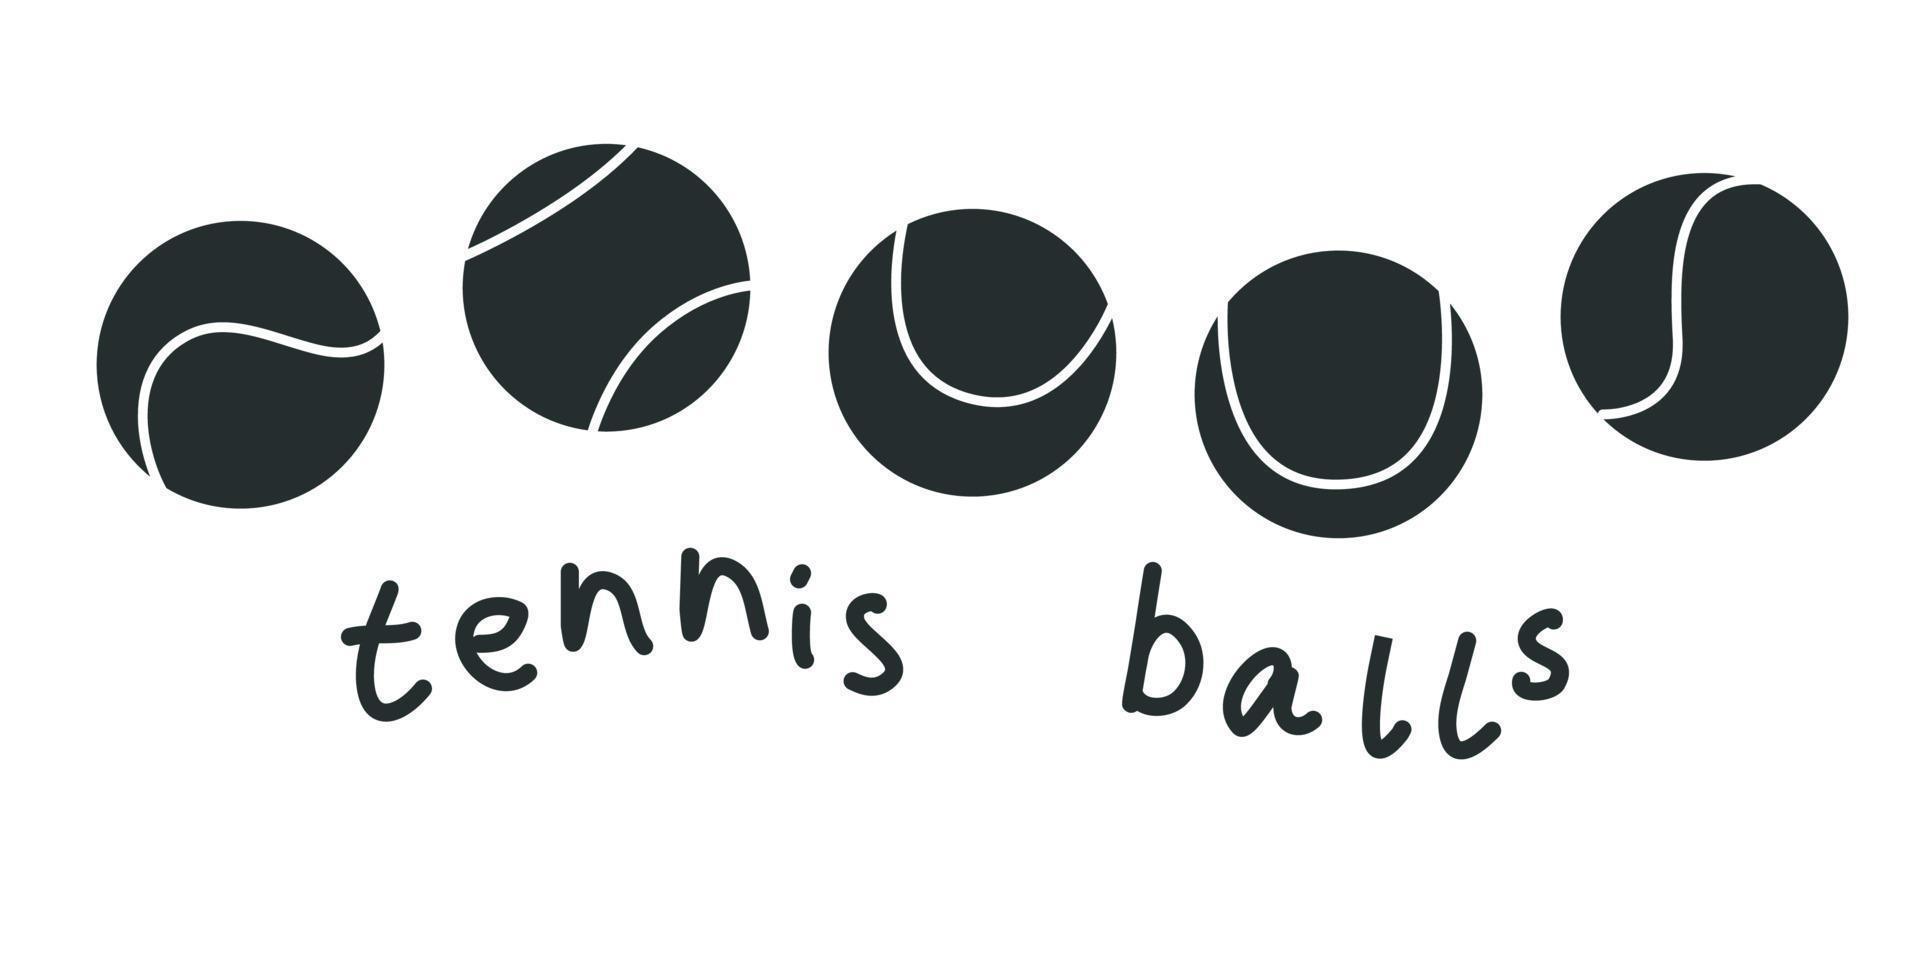 Flat vector silhouette illustration. Hand drawn different tennis balls